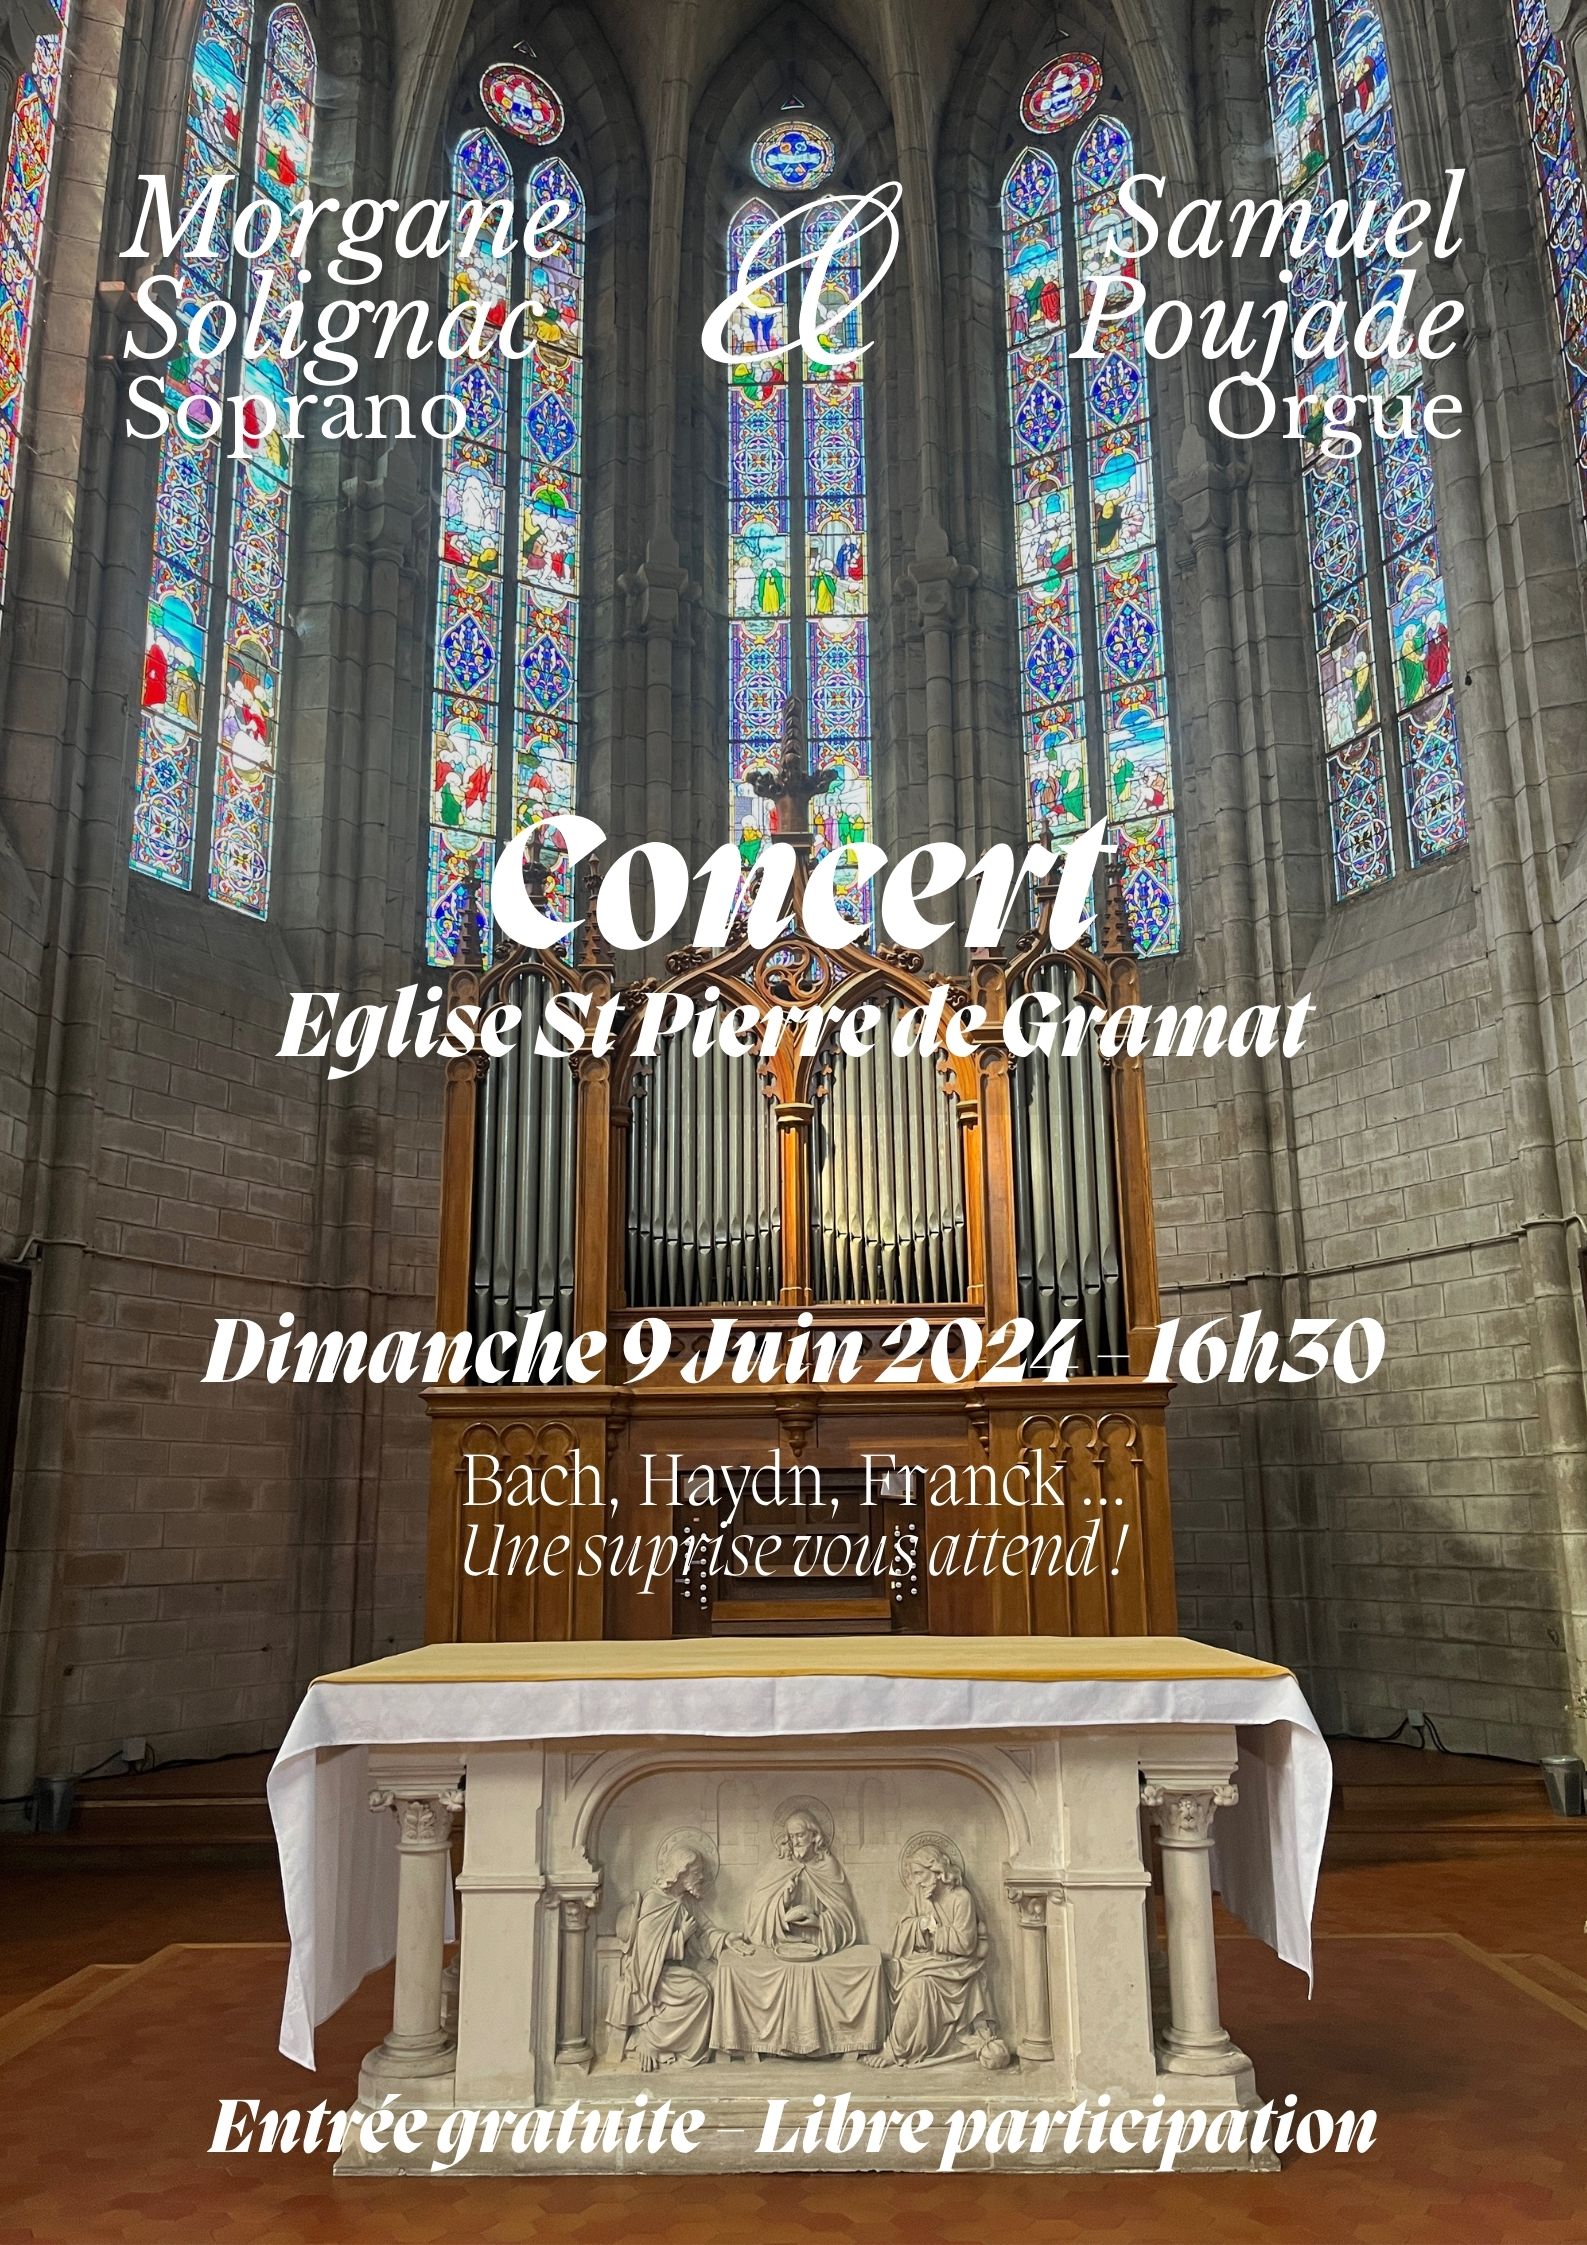 Figeac : Concert Soprano & Orgue avec Morgane Solignac et Samuel Poujade